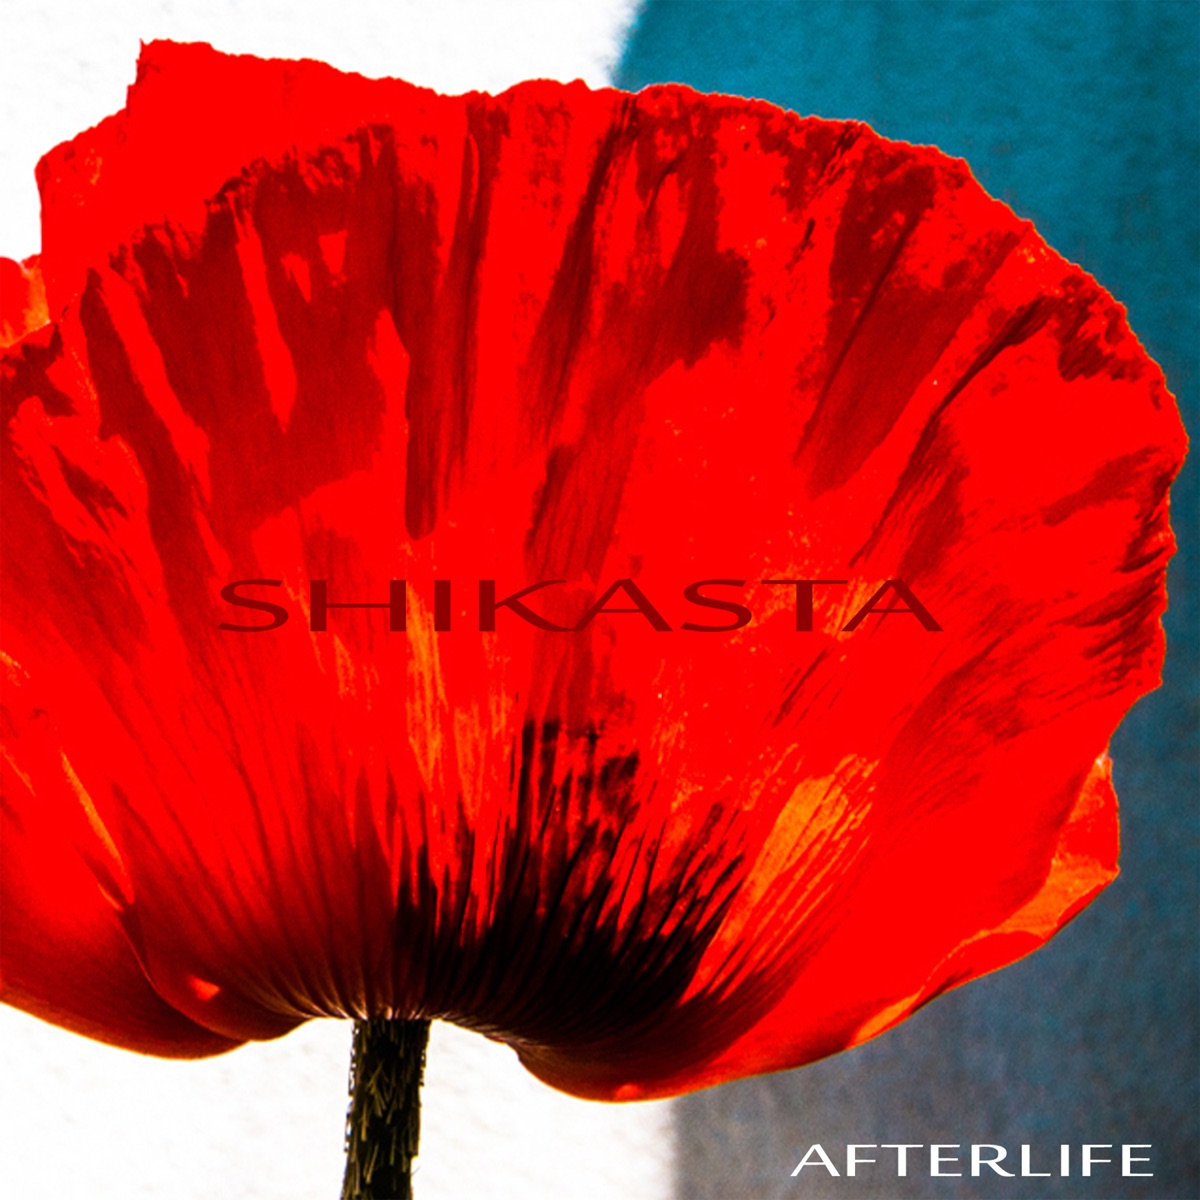  The Afterlife Lounge (Remastered) : Afterlife: Digital Music